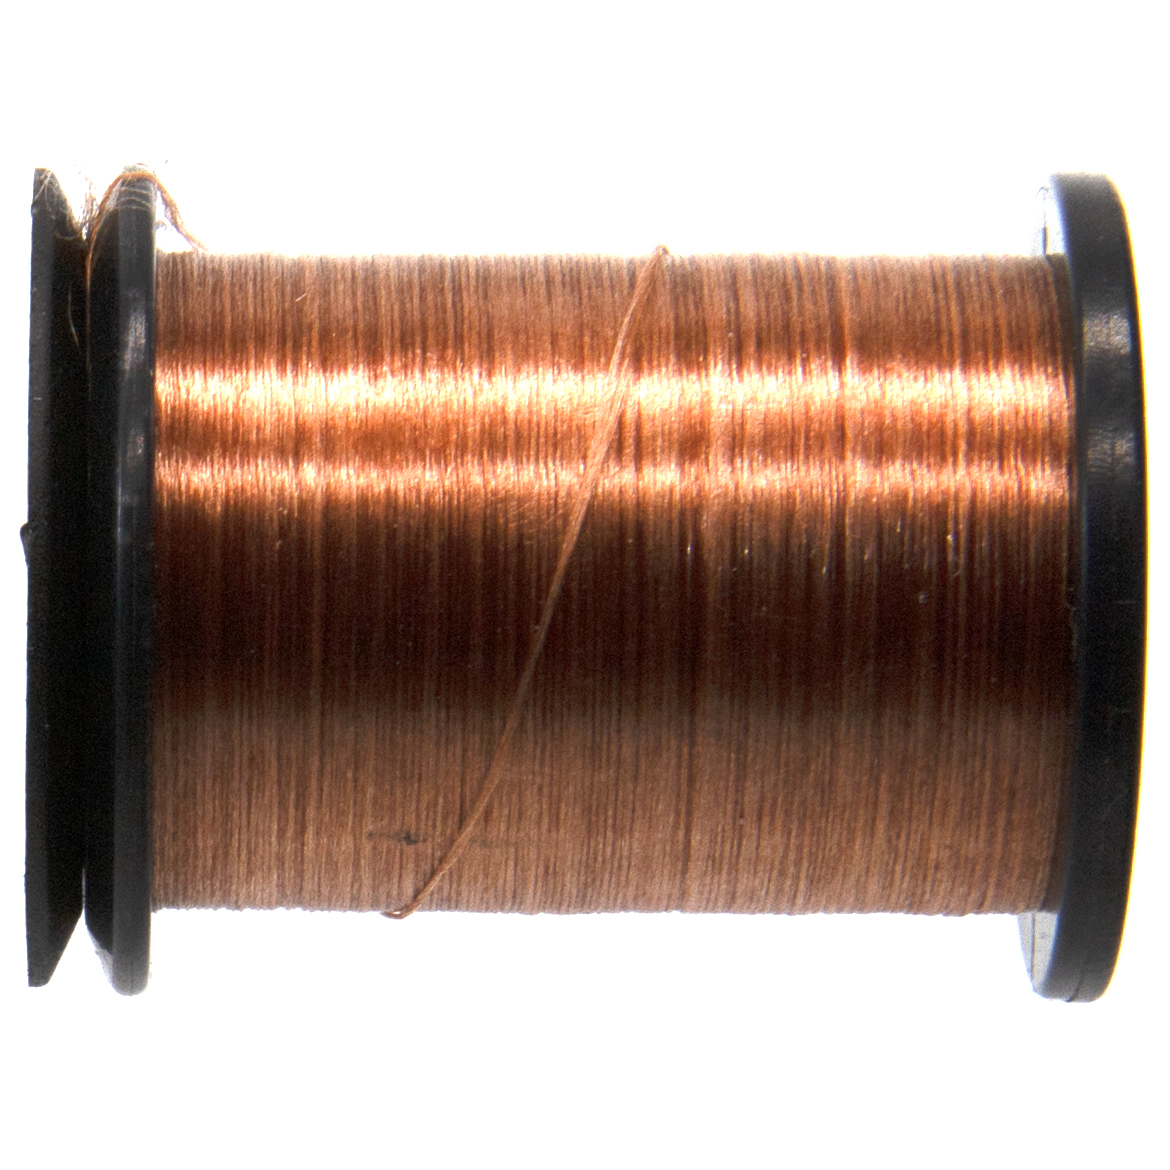 Nano Silk 100D Copper